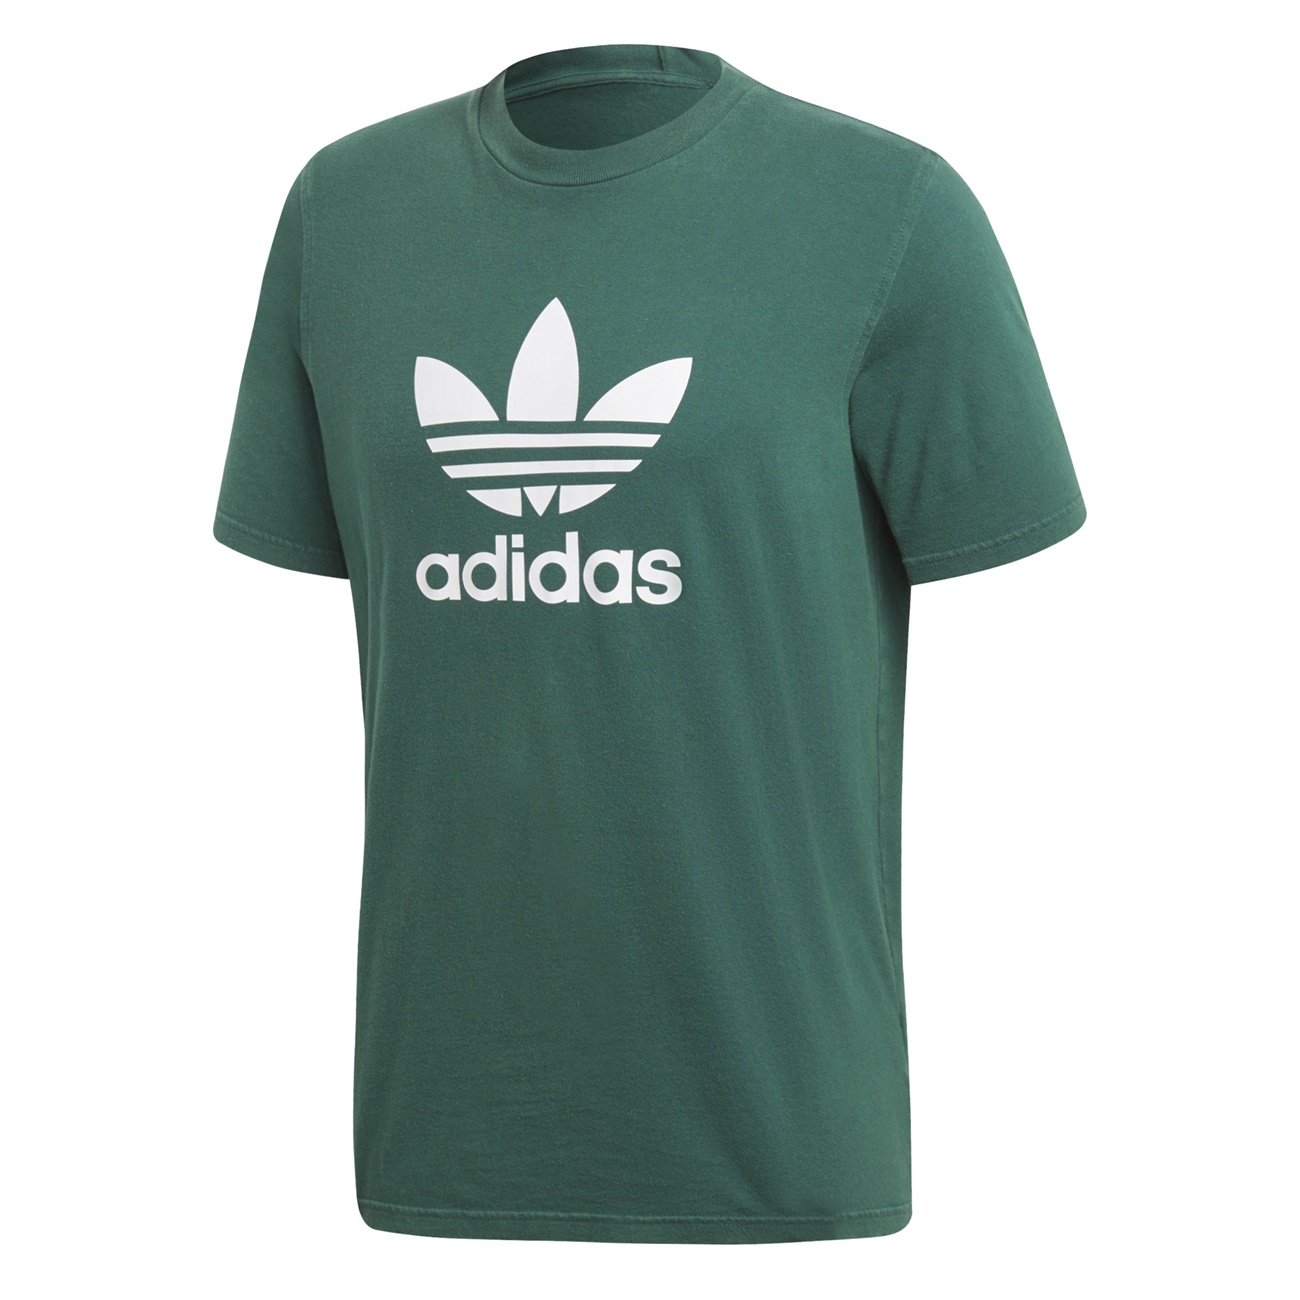 Complaciente Nube Registrarse Adidas Originals Trefoil T-Shirt (Green) - manelsanchez.com